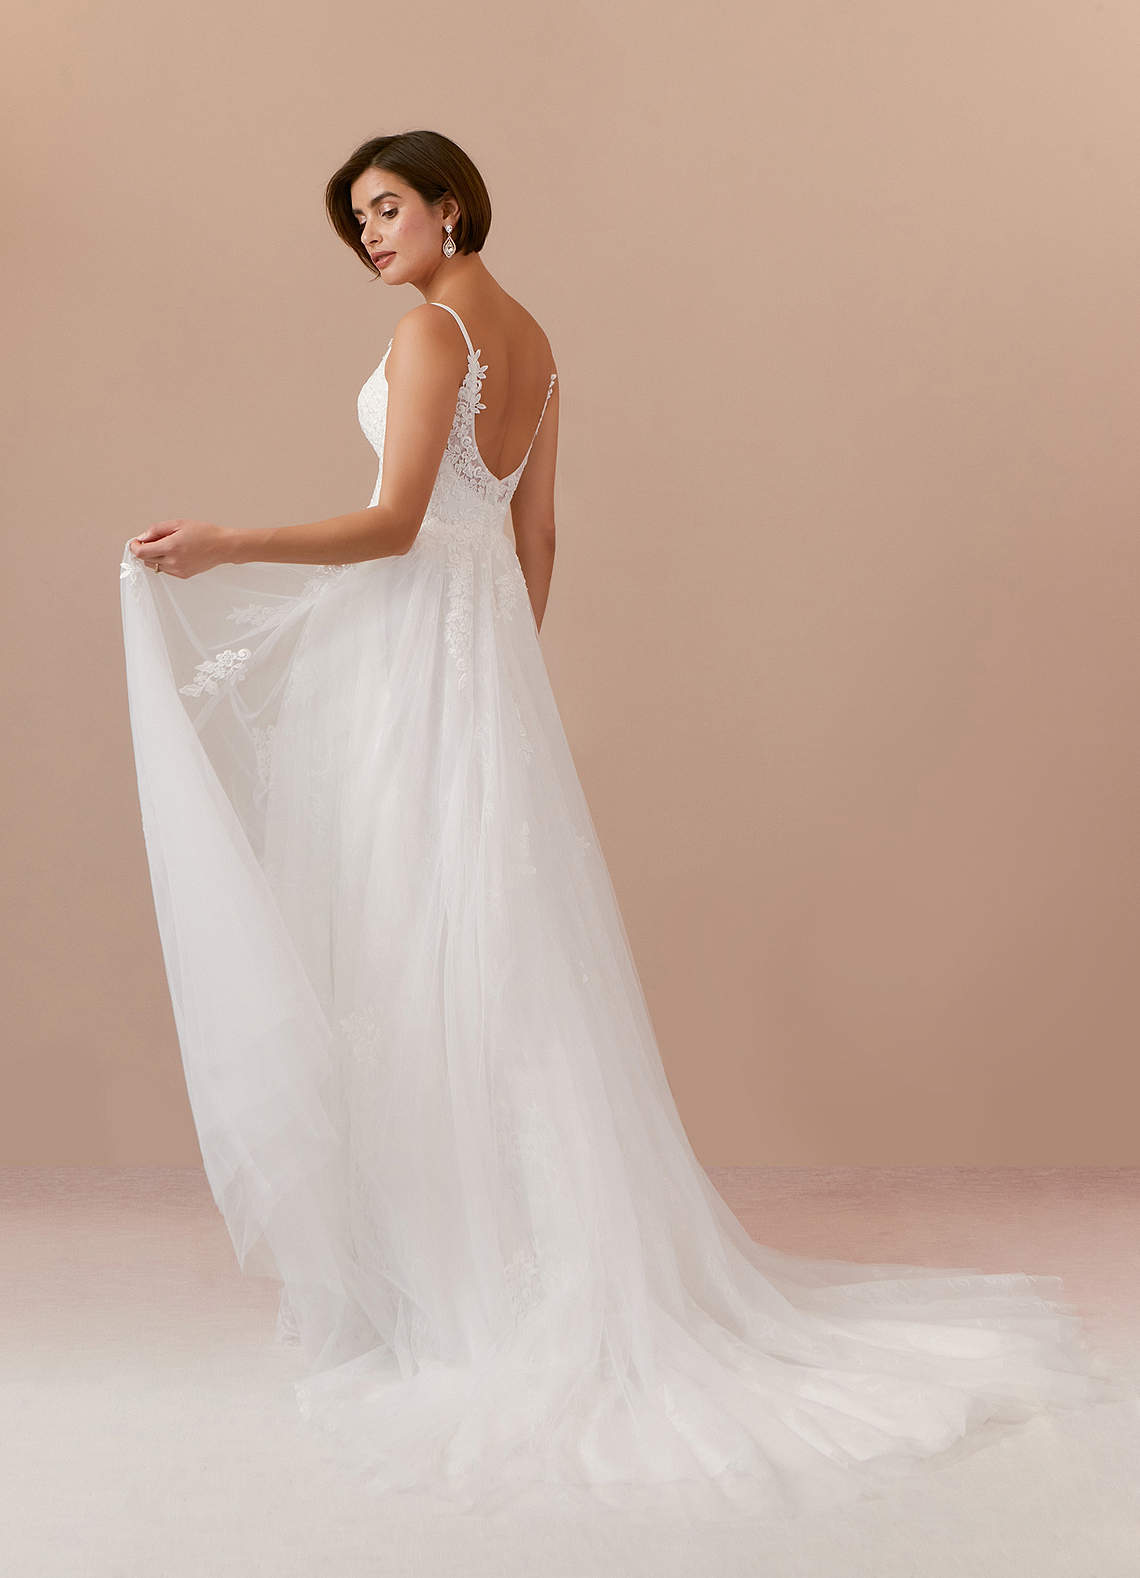 Azazie Jolene Wedding Dresses A-Line Lace Tulle Cathedral Train Dress image1